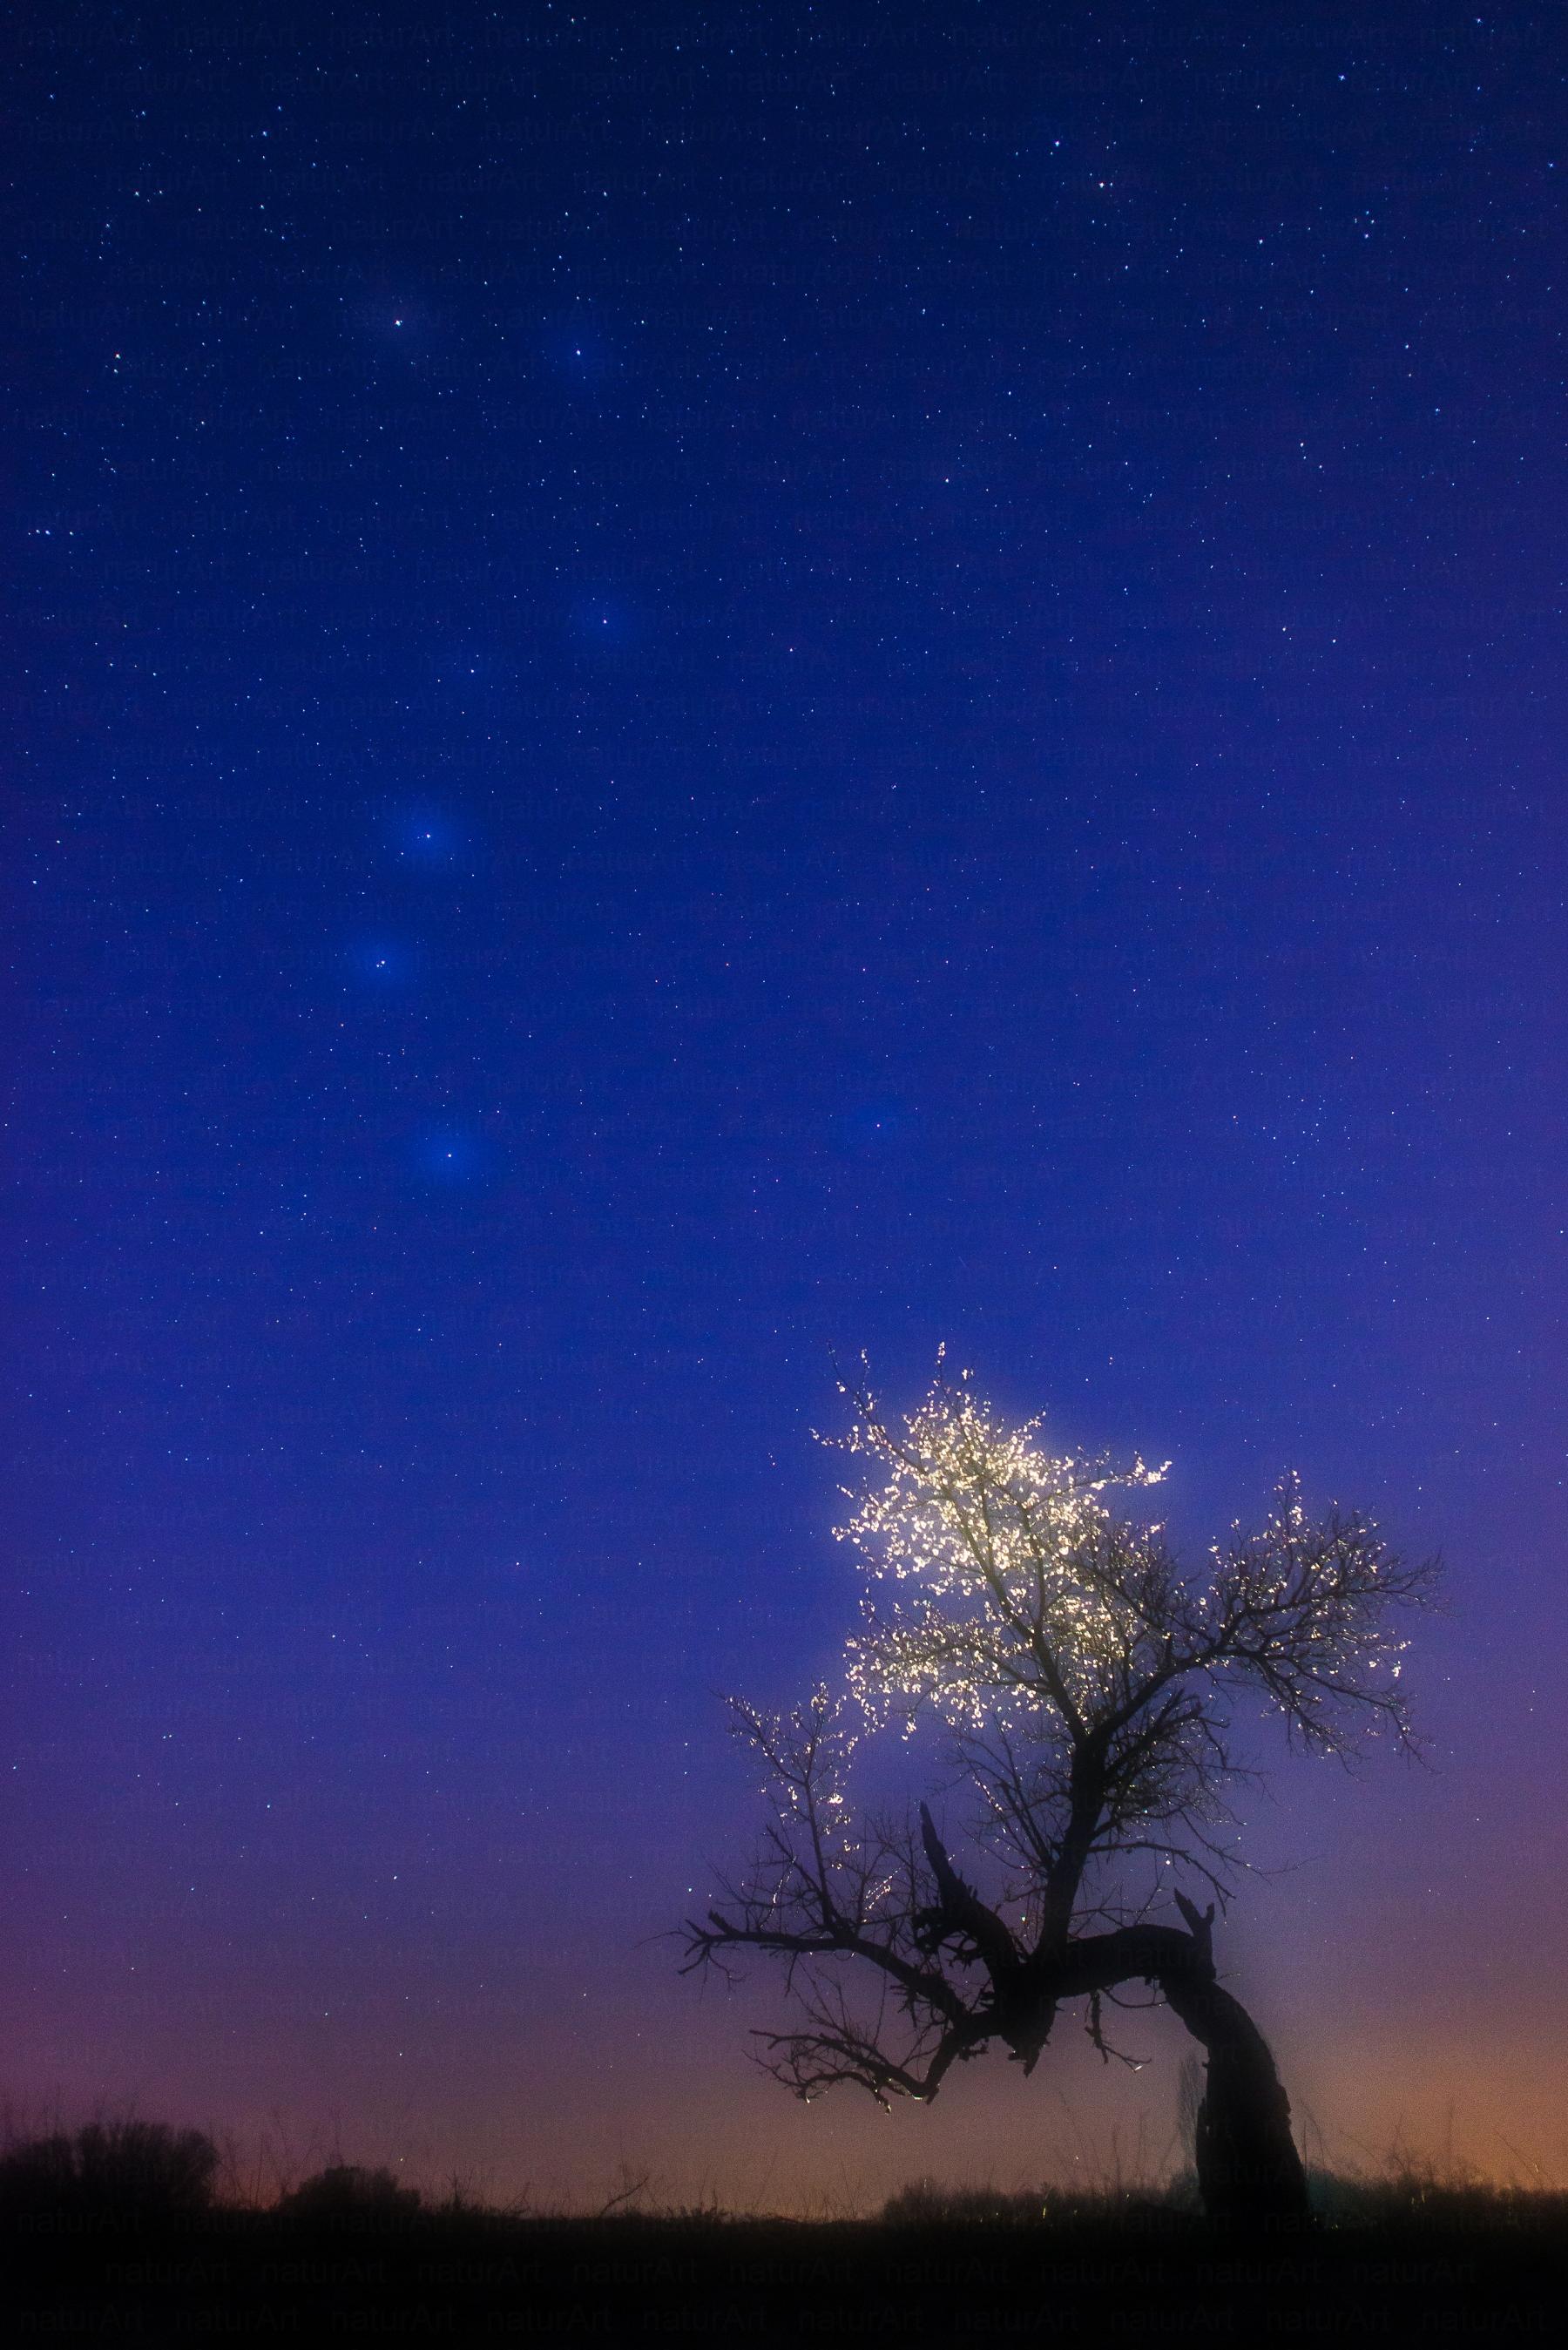 A fa csillagképe